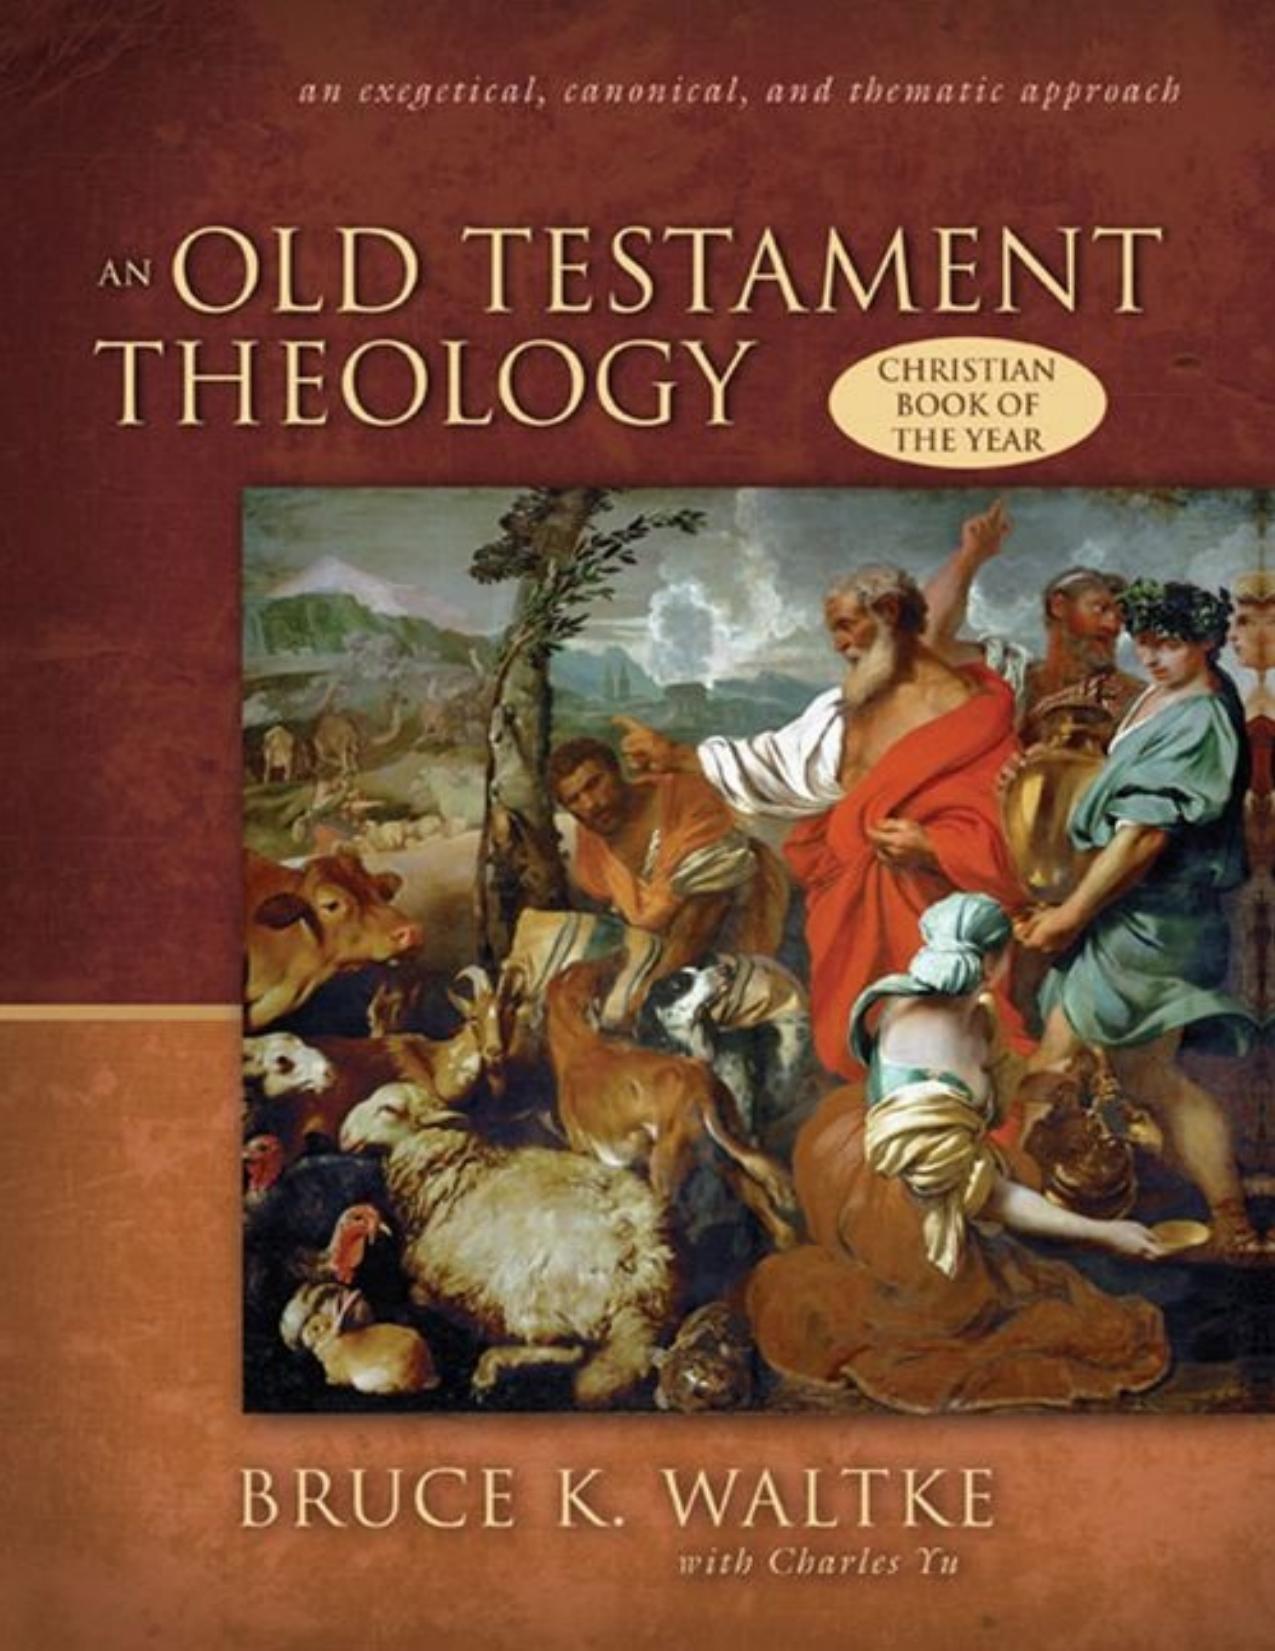 An Old Testament Theology - PDFDrive.com